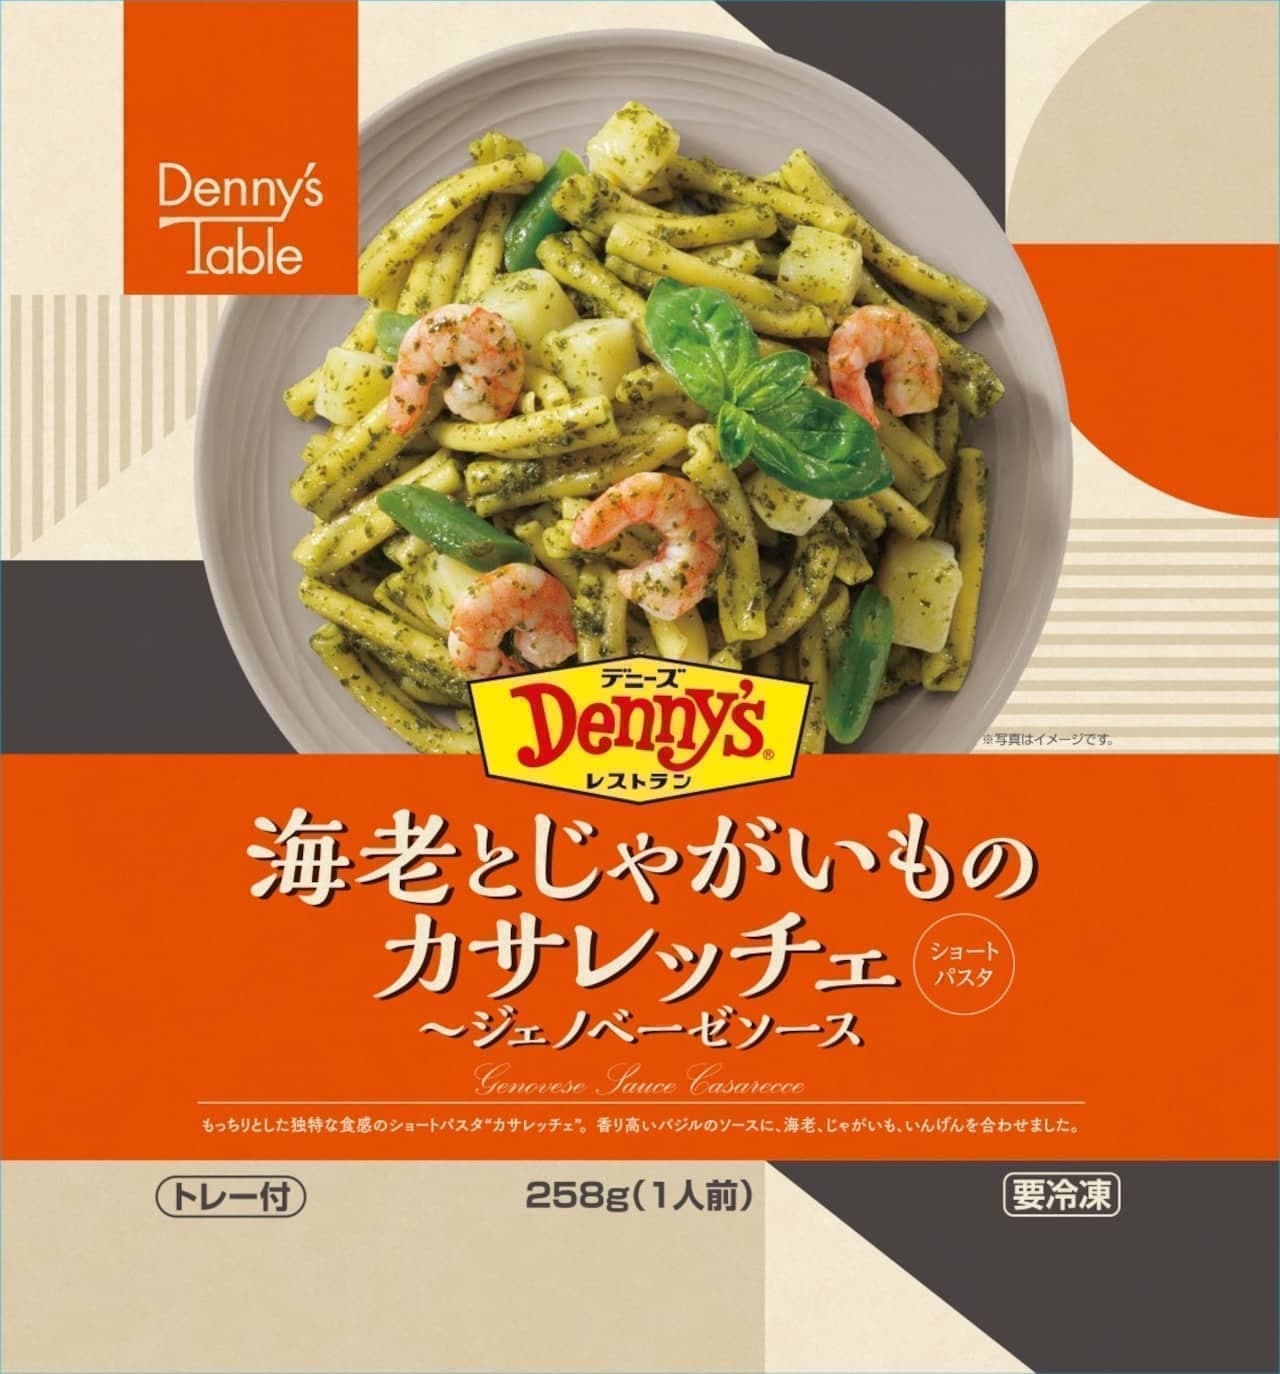 Denny's "Shrimp and Potato Casalecce - Genovese Sauce